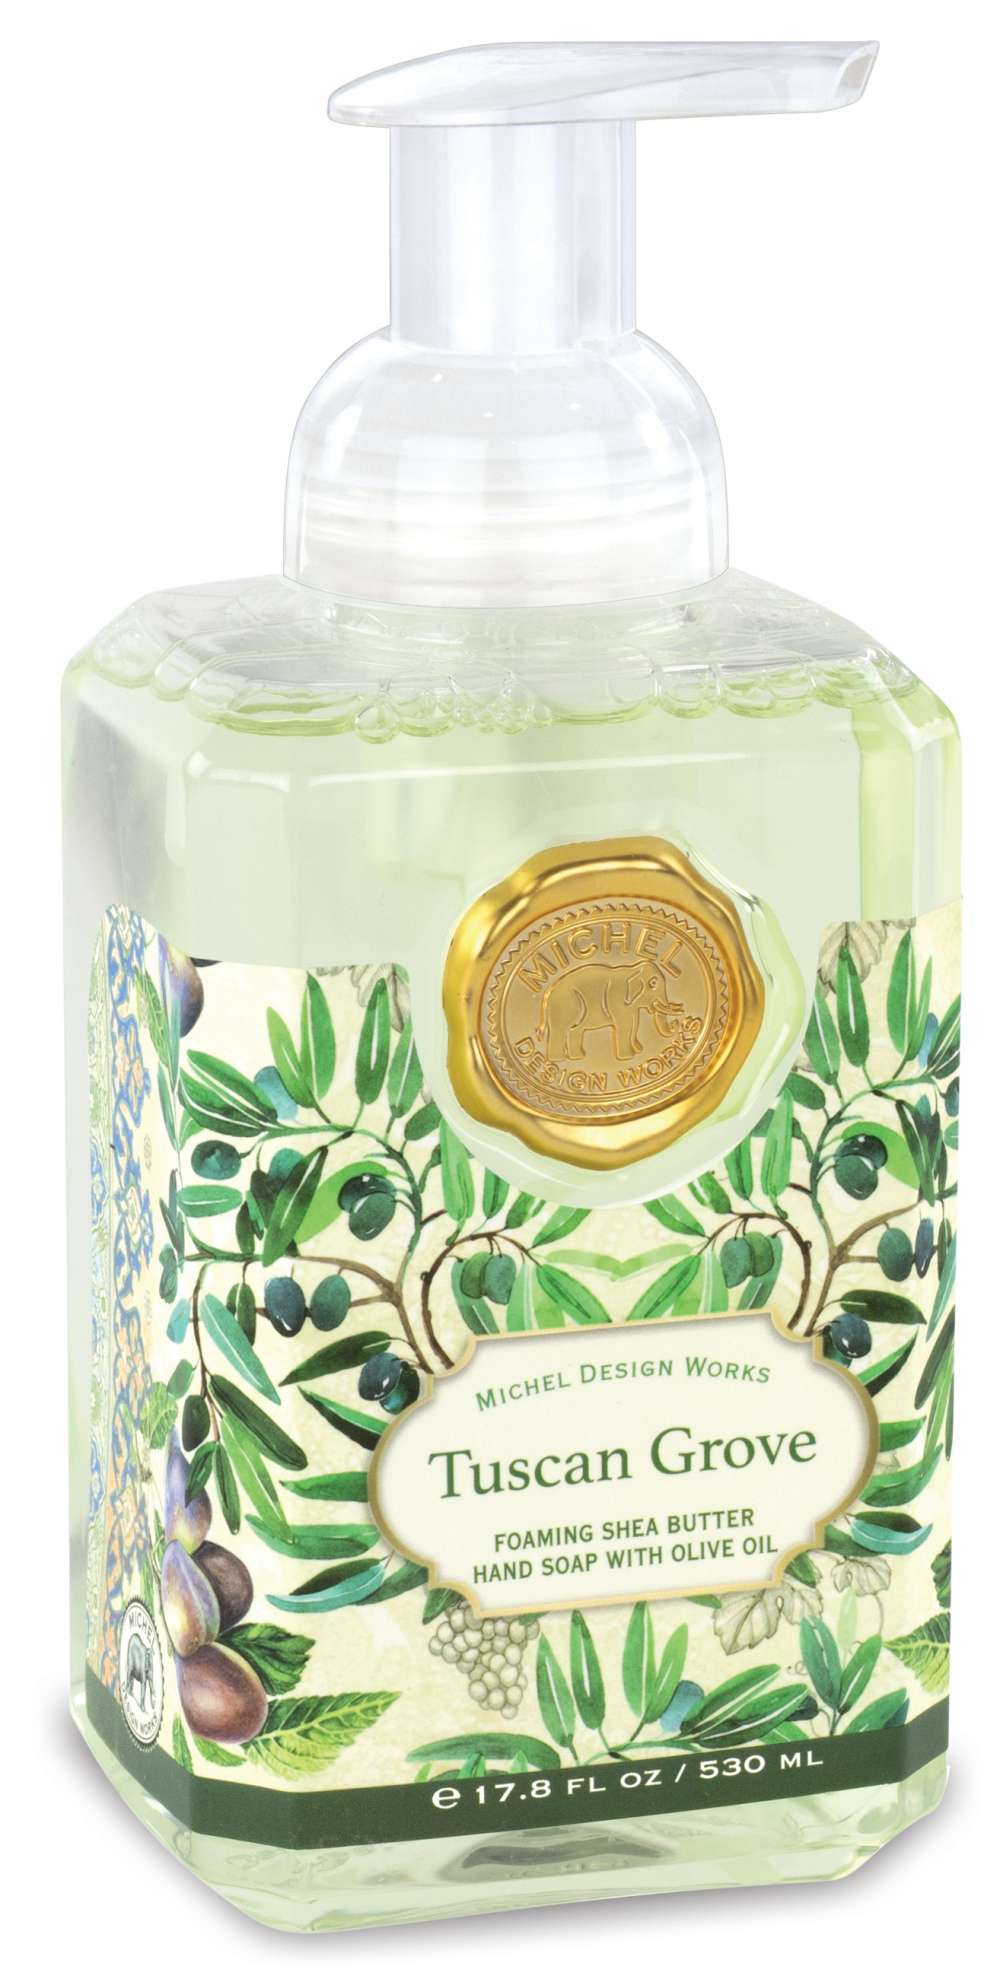 Tuscan Grove Foaming Hand Soap